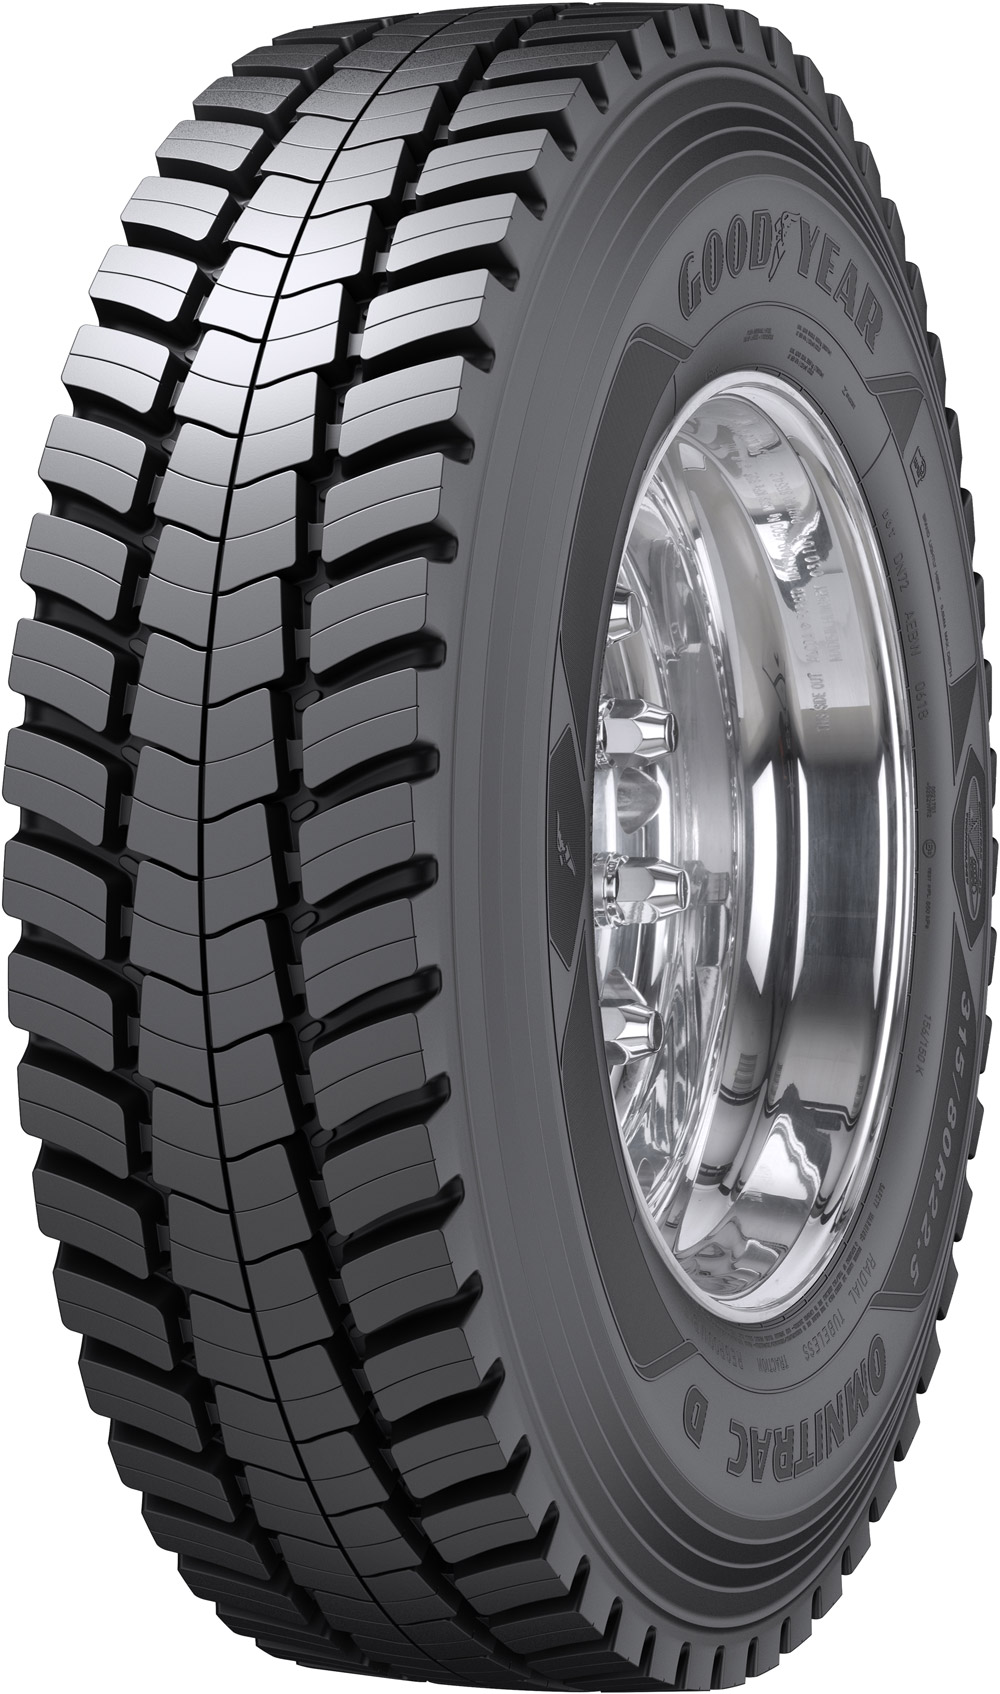 product_type-heavy_tires GOODYEAR OMNITRAC D 20 TL 13 R22.5 156K